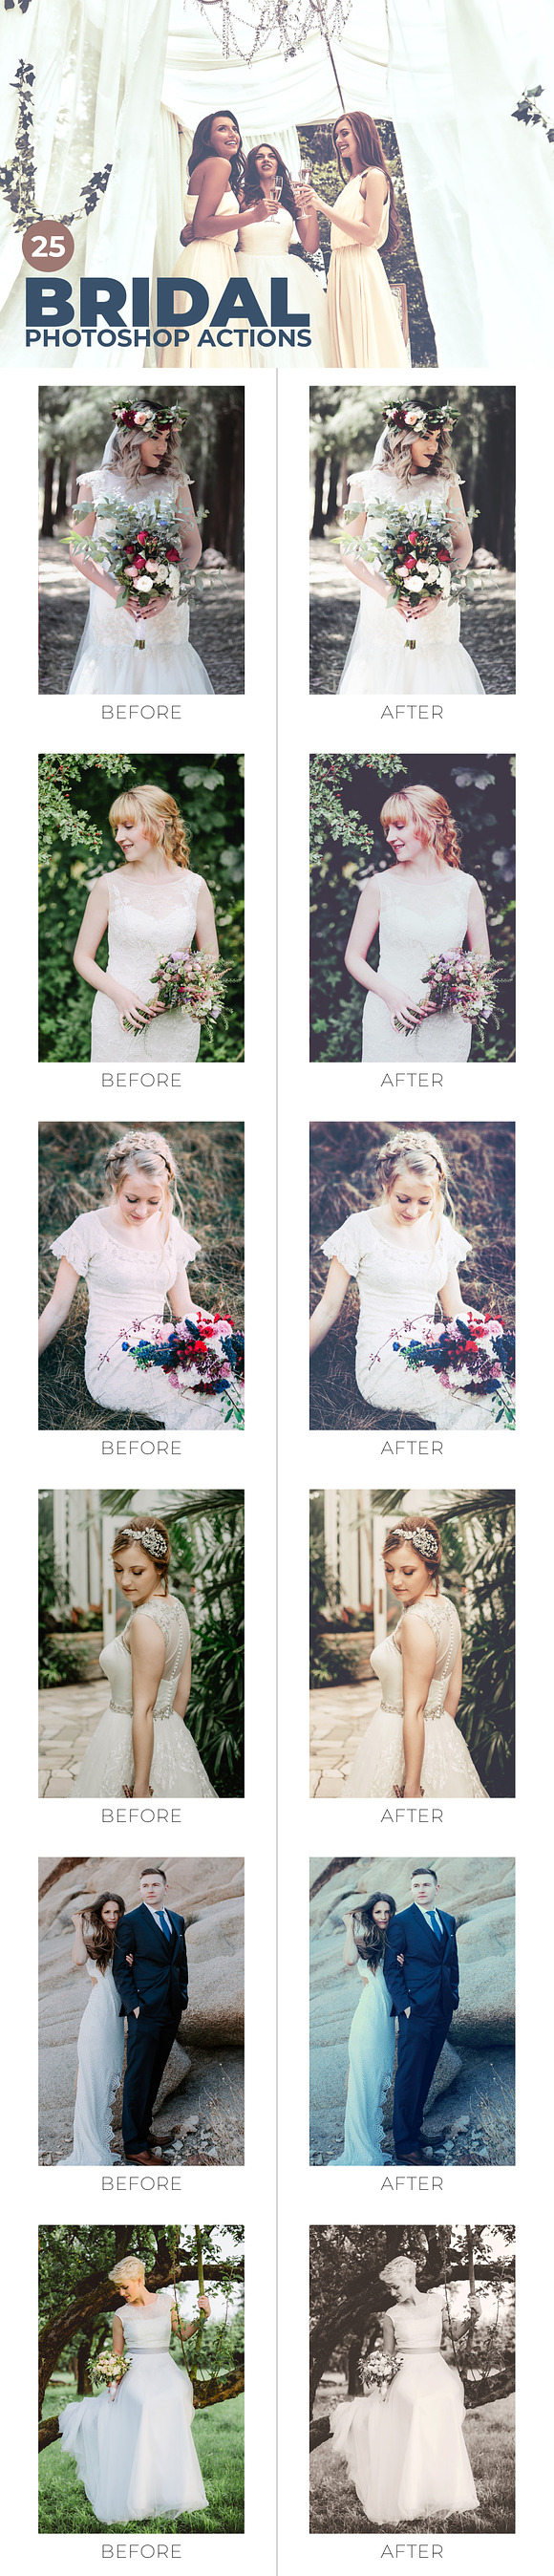 25 Bridal Photoshop Actions